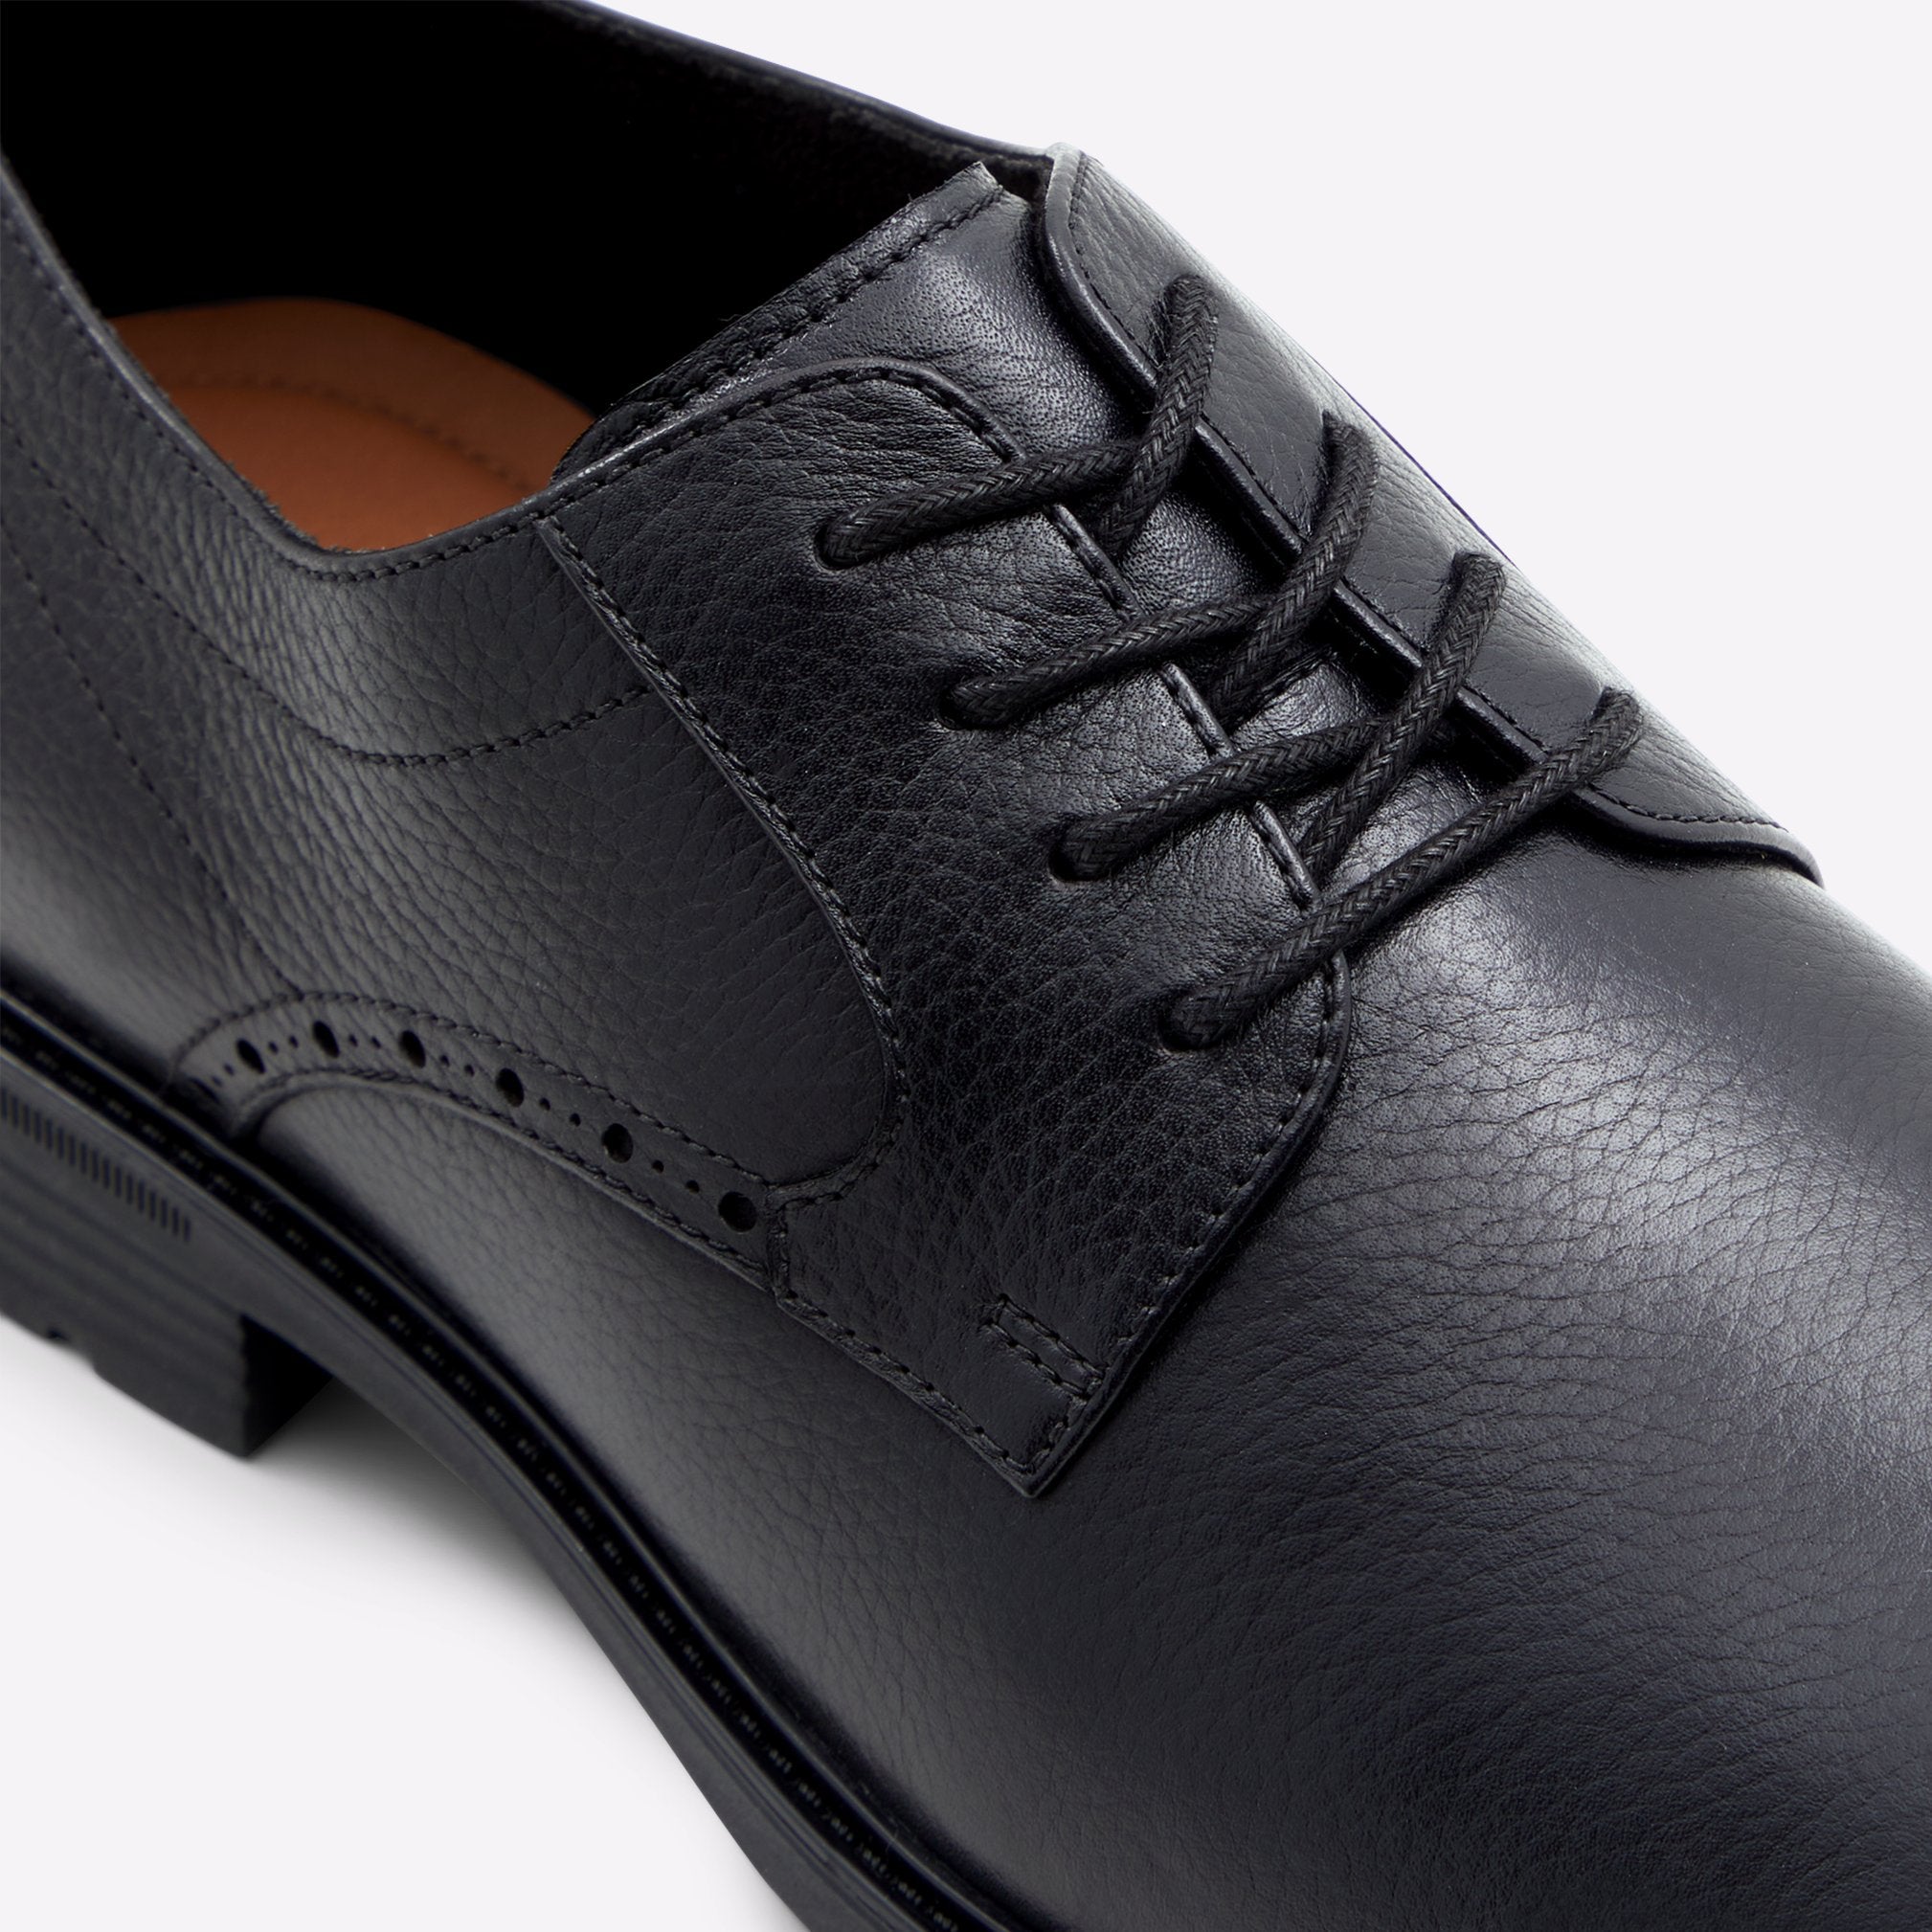 Nobel Men Shoes - Black - ALDO KSA